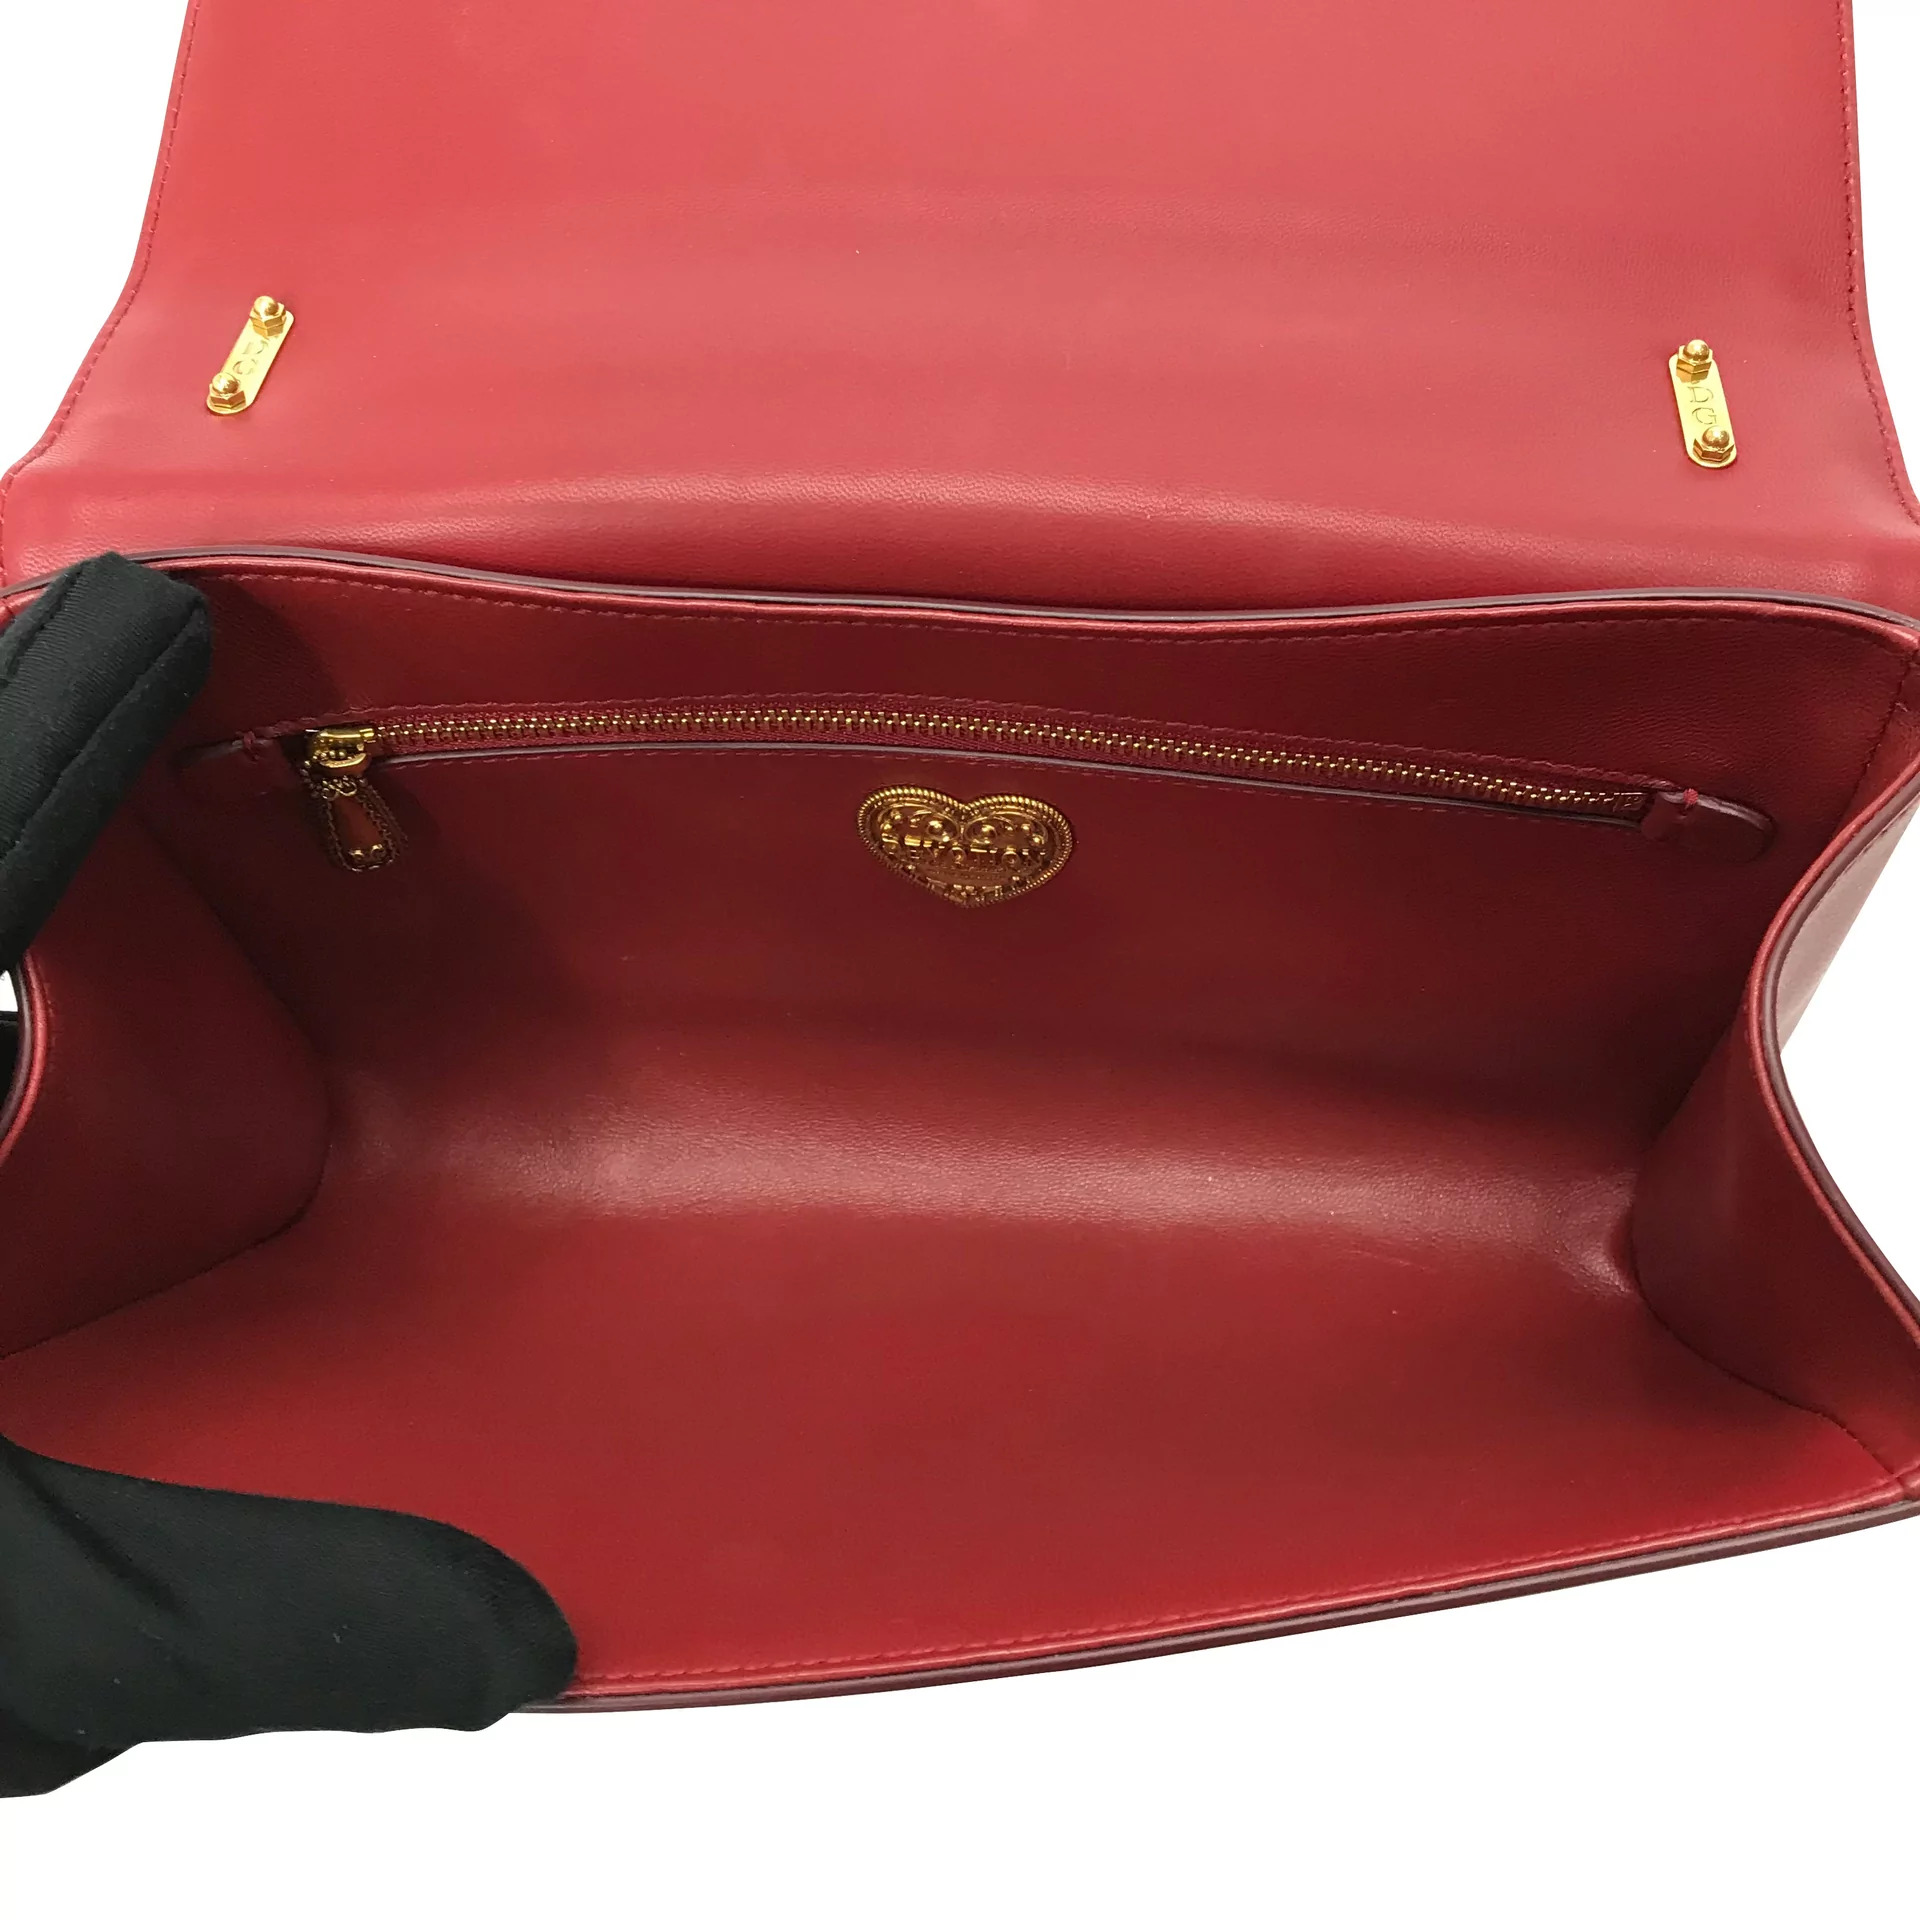 Bolsa Dolce & Gabbana Devotion Vermelha